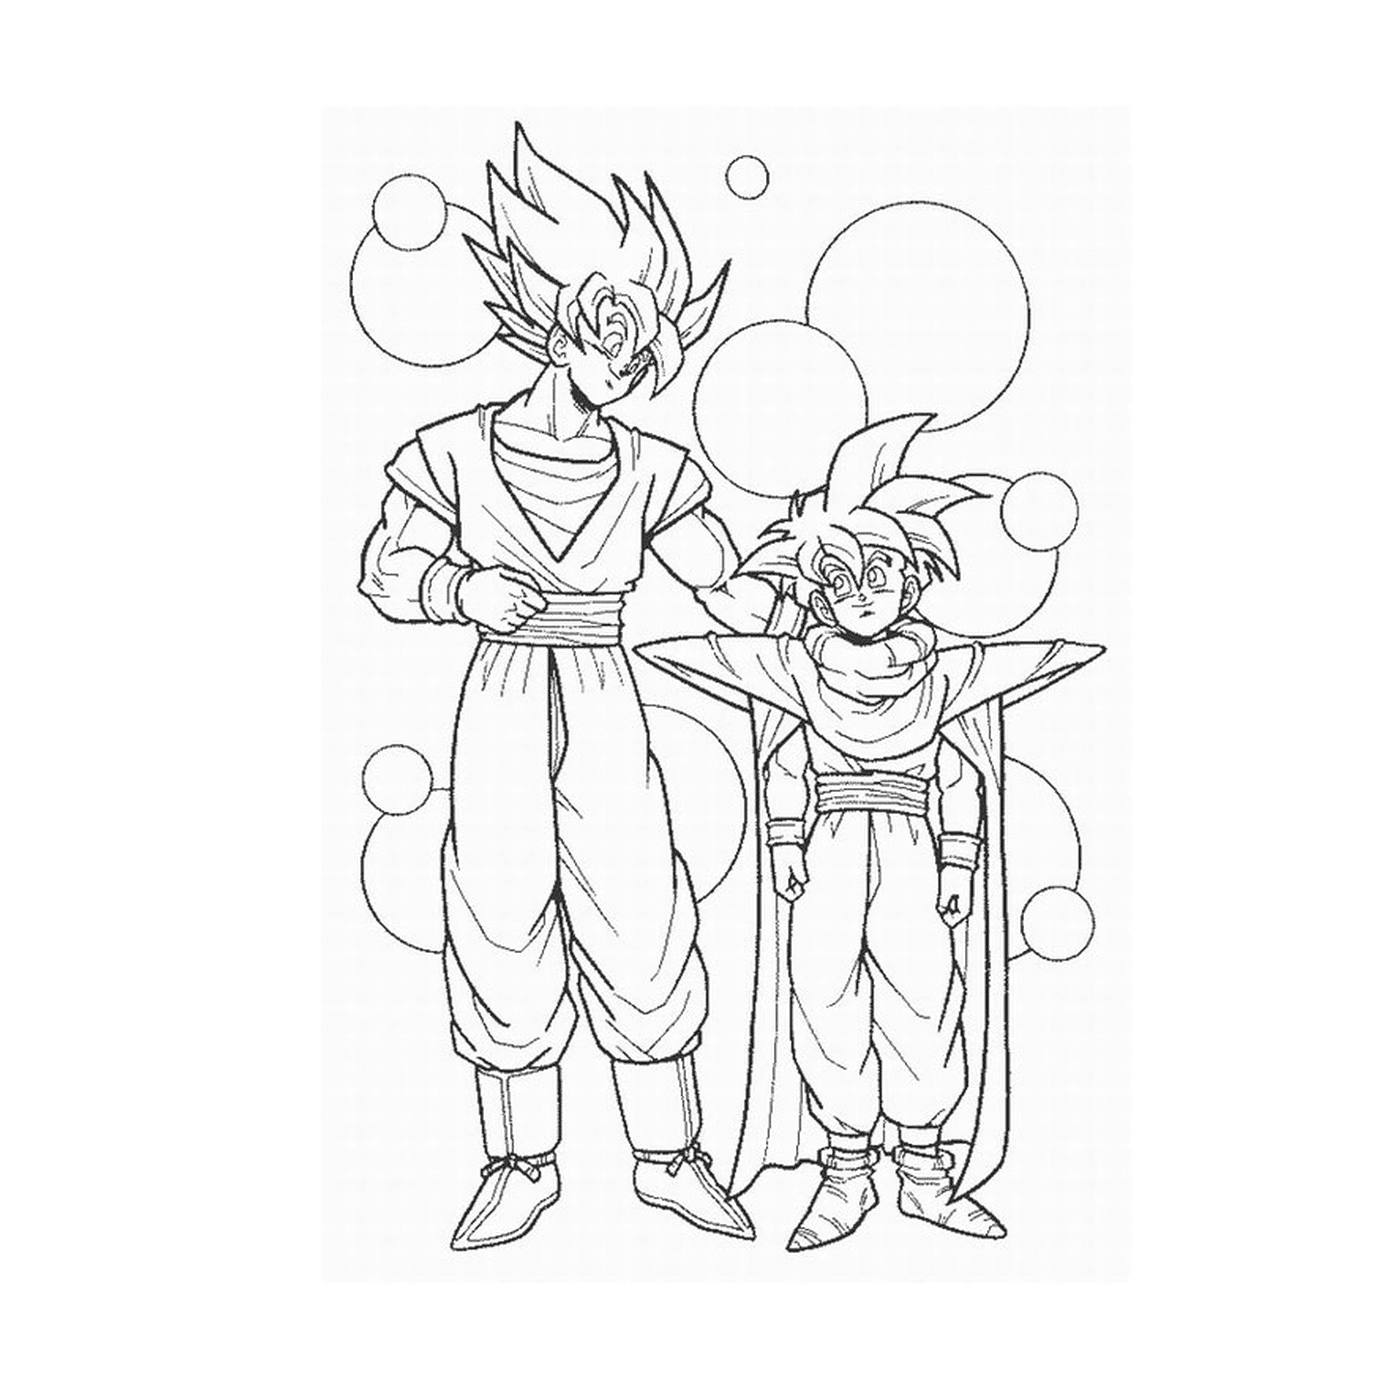  Goku and Vegeta, mighty warriors 